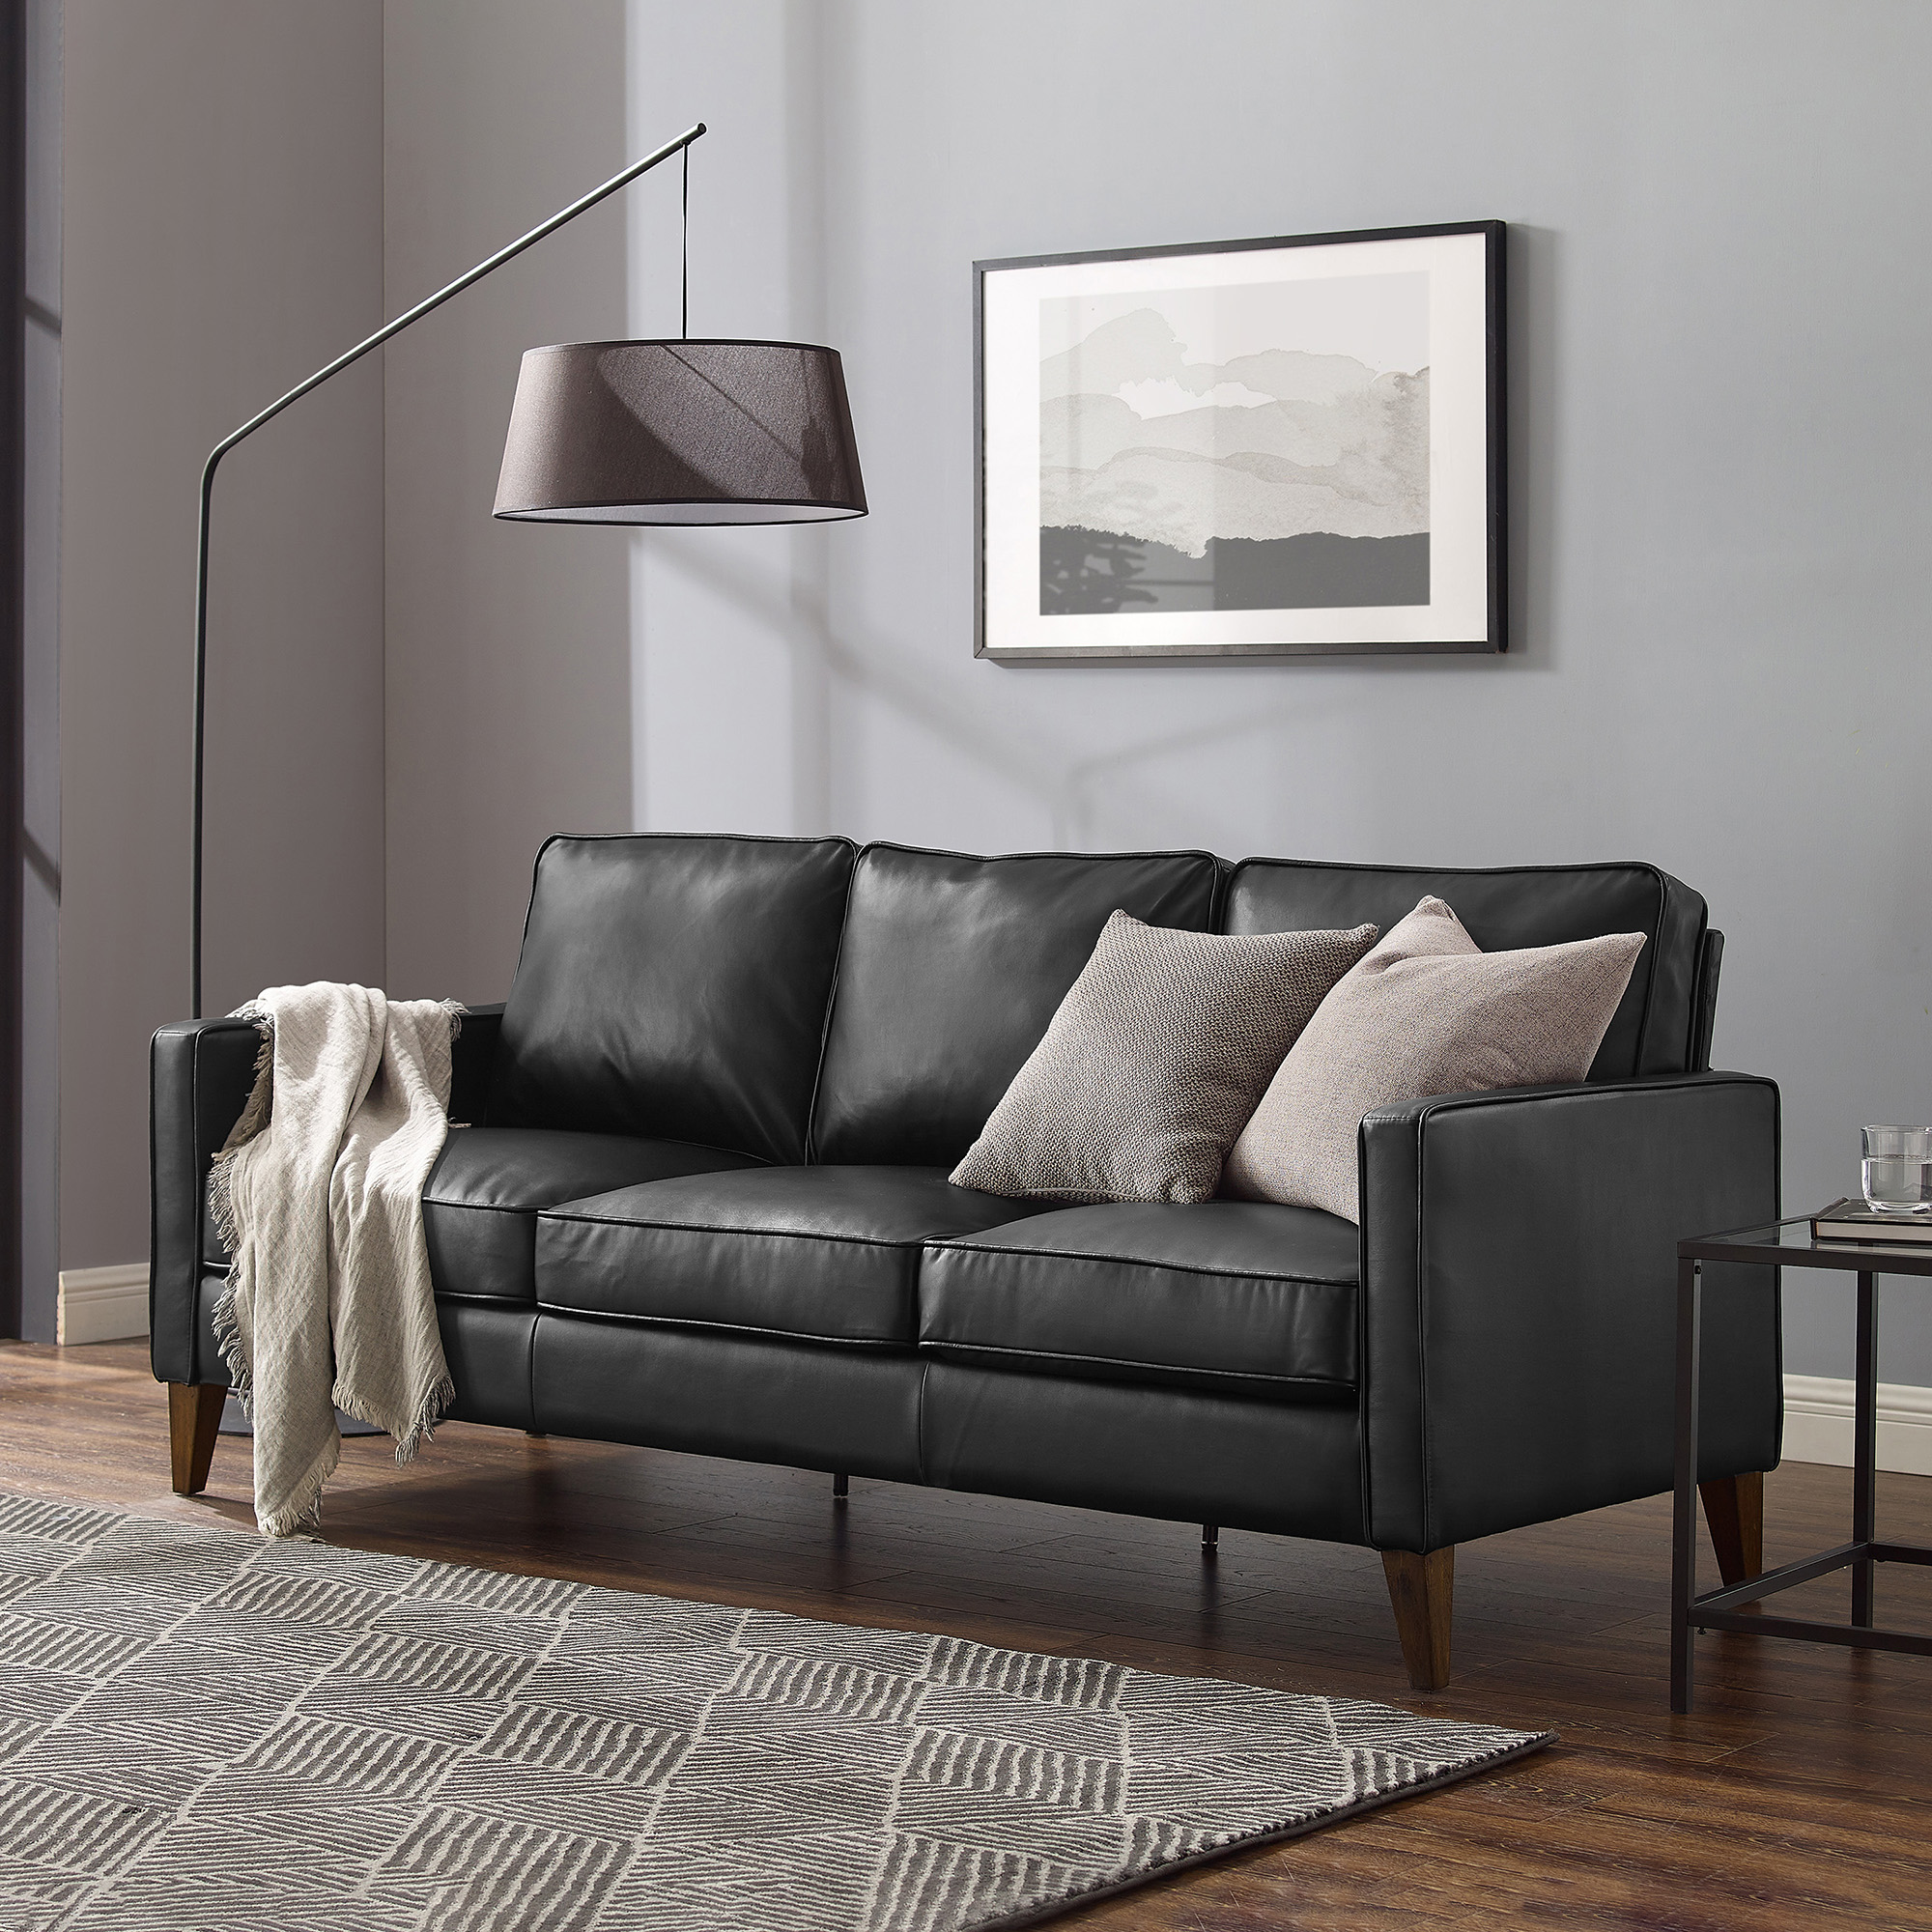 Hillsdale Jianna Faux Leather Sofa, Black - image 1 of 12